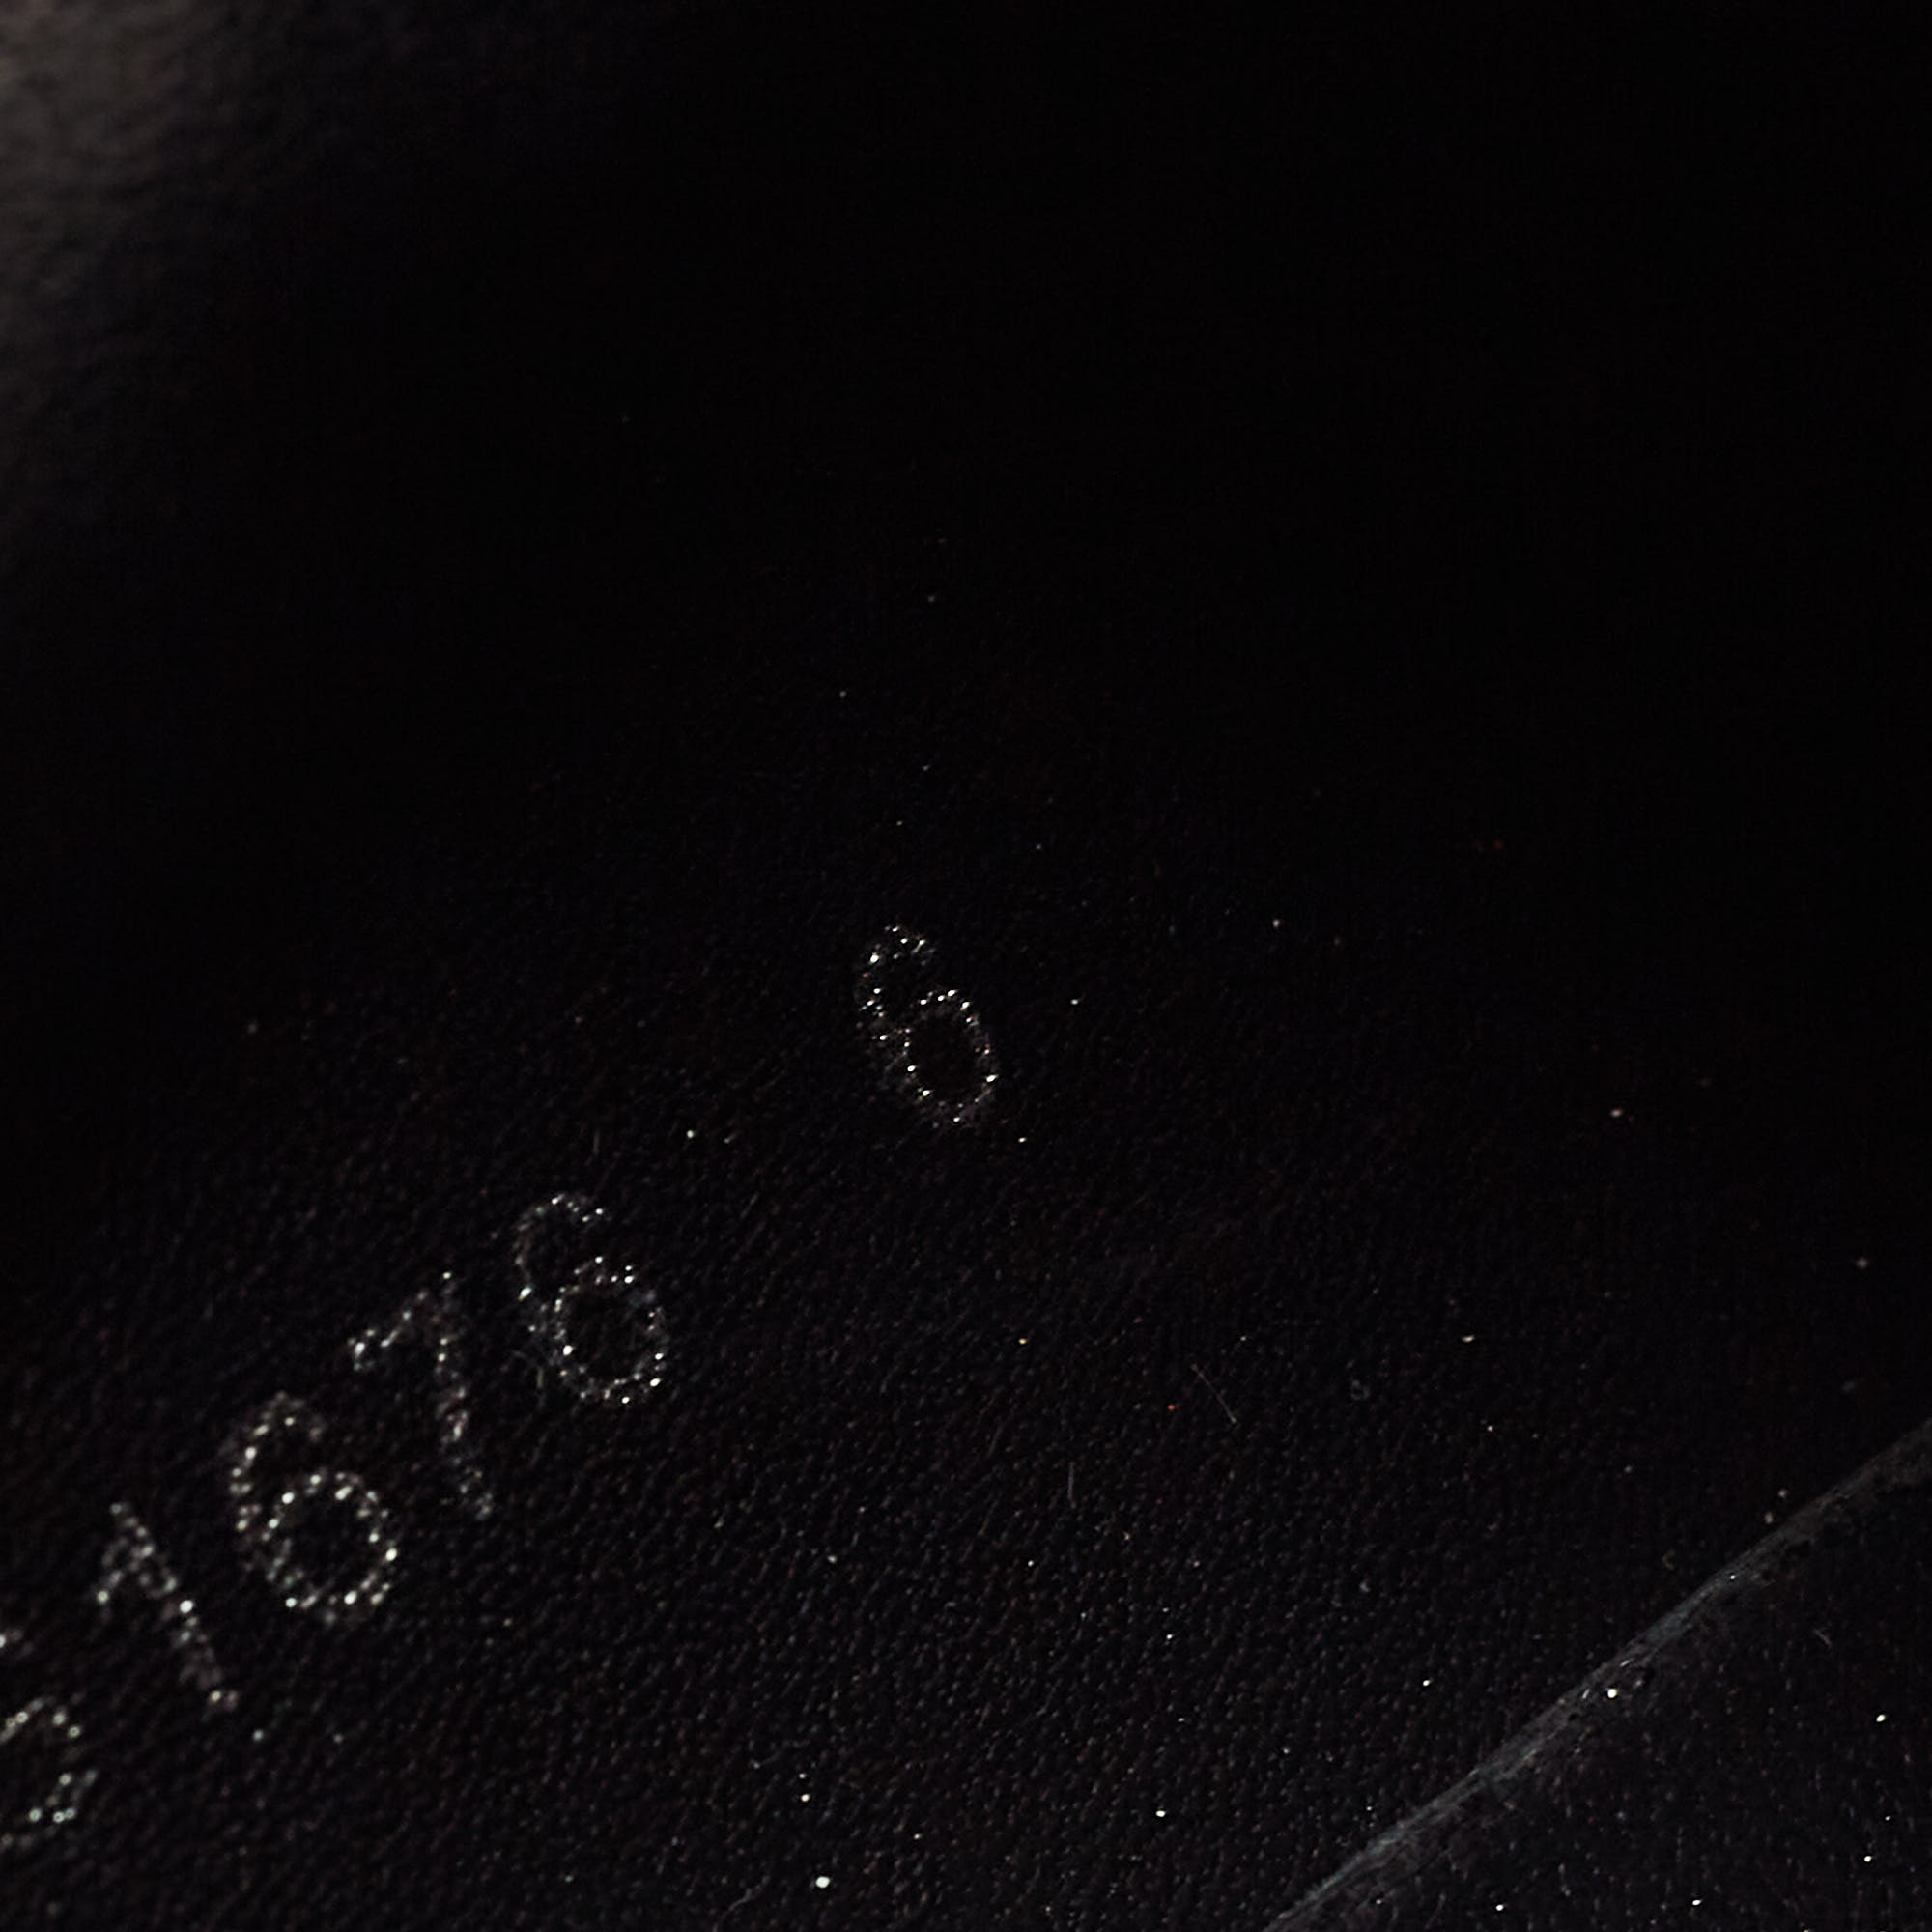 Dolce & Gabbana Black Leather DG Heart Sneakers Size 40